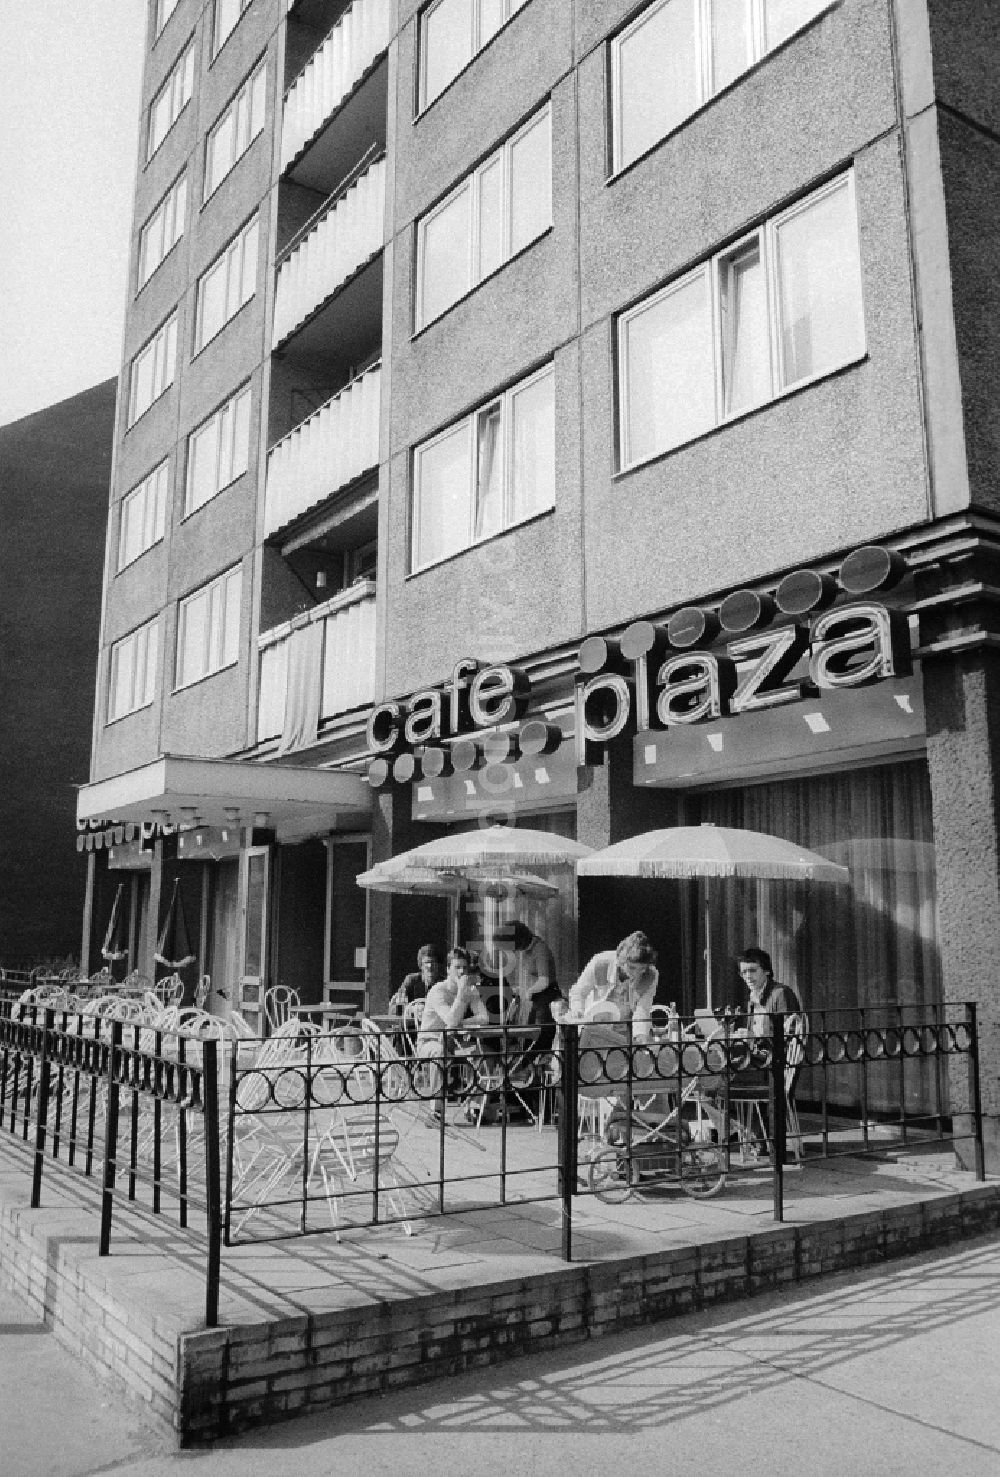 DDR-Fotoarchiv: Berlin - Cafe plaza in Berlin, der ehemaligen Hauptstadt der DDR, Deutsche Demokratische Republik